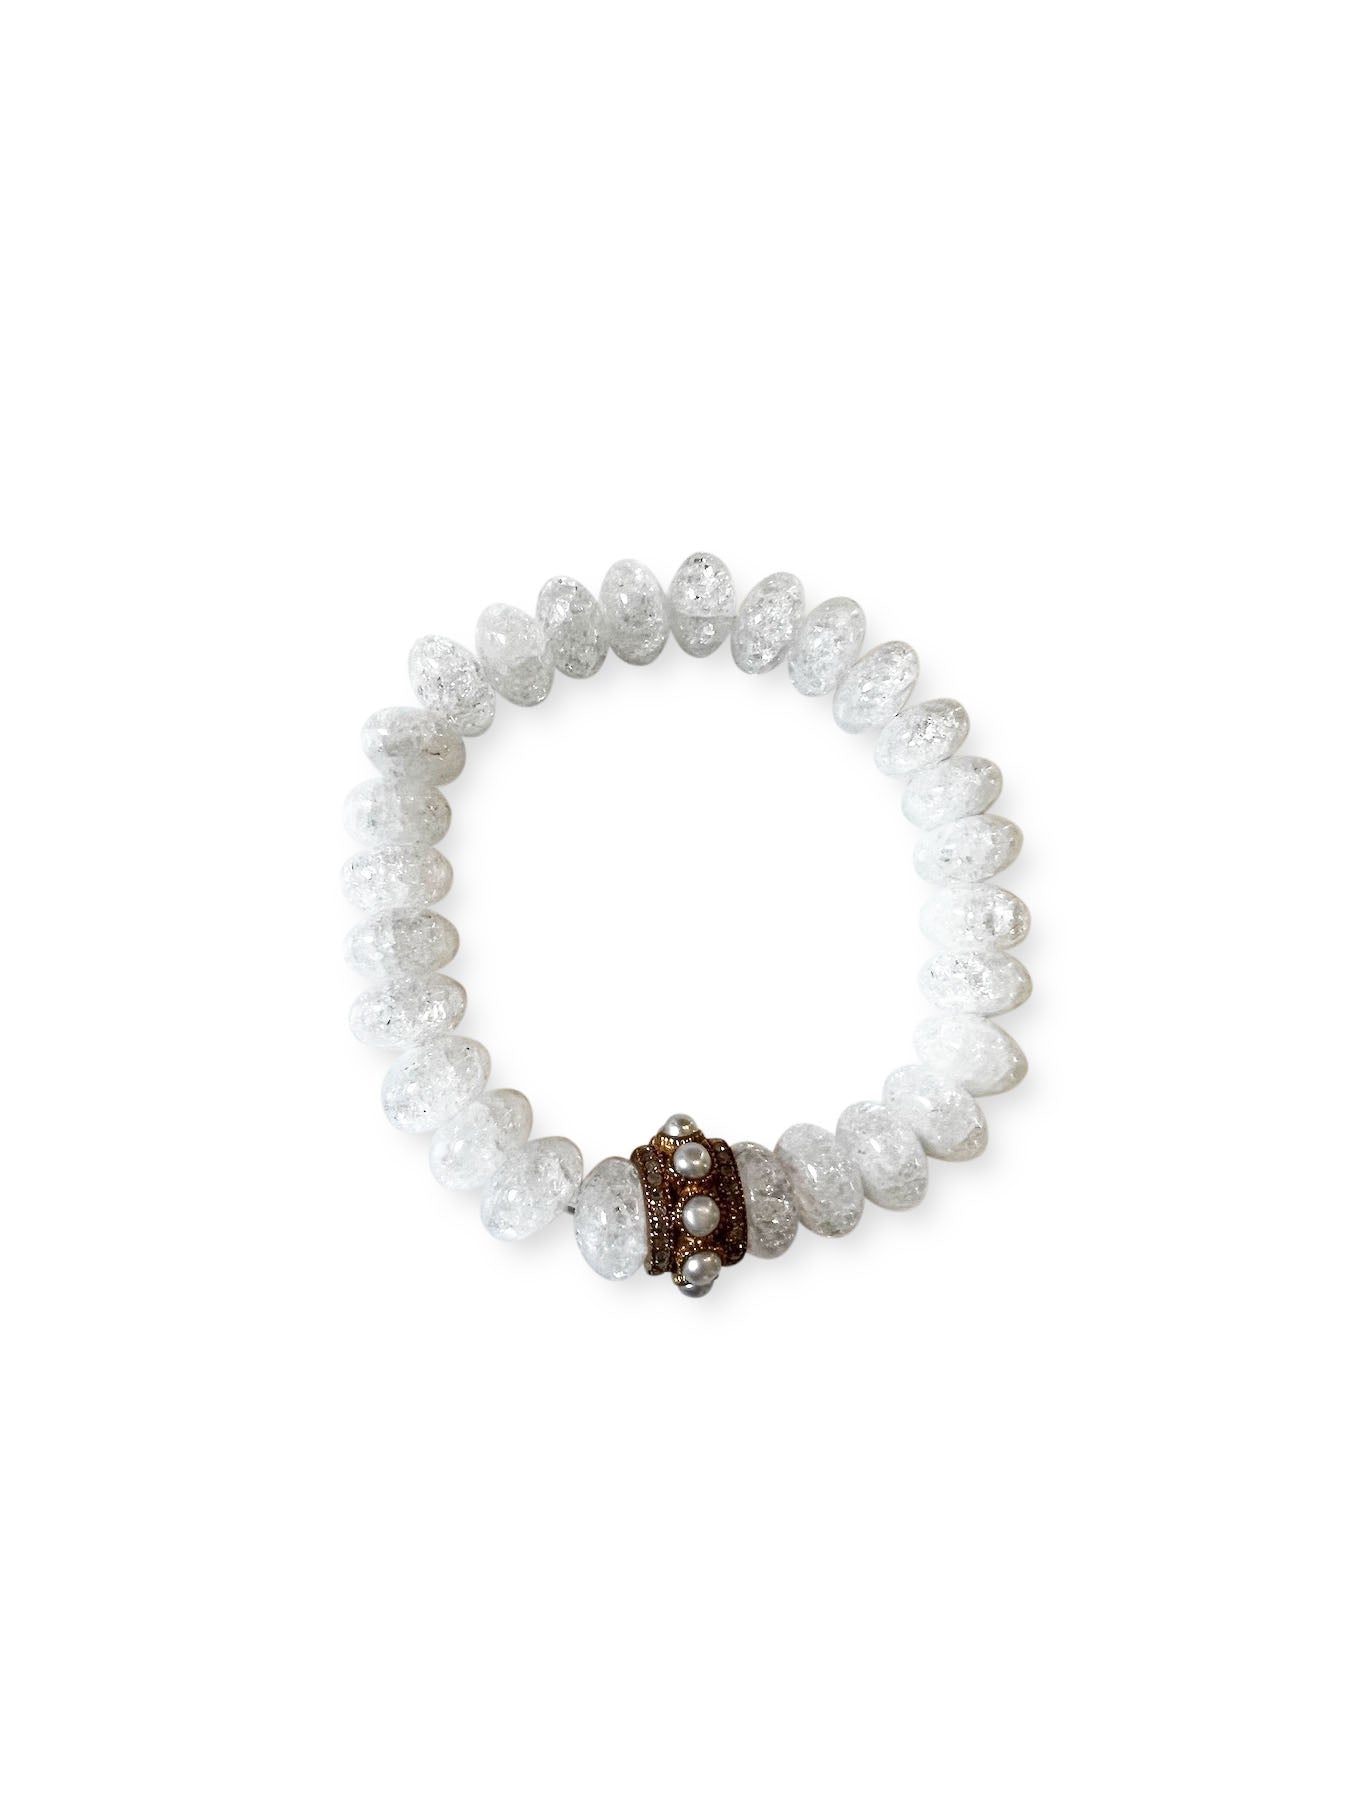 Crystal Quartz Rondelles with Pave Diamond Pearl Bead